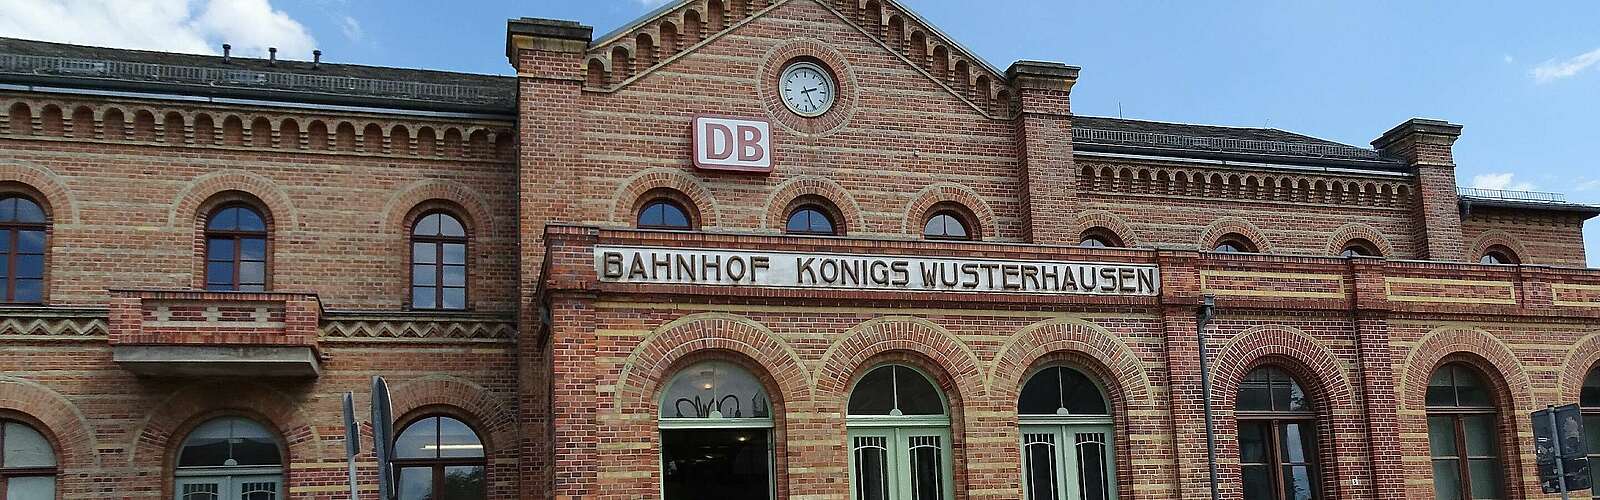 Bahnhof Königs Wusterhausen,
        
    

        Foto: Fotograf / Lizenz - Media Import/Petra Förster